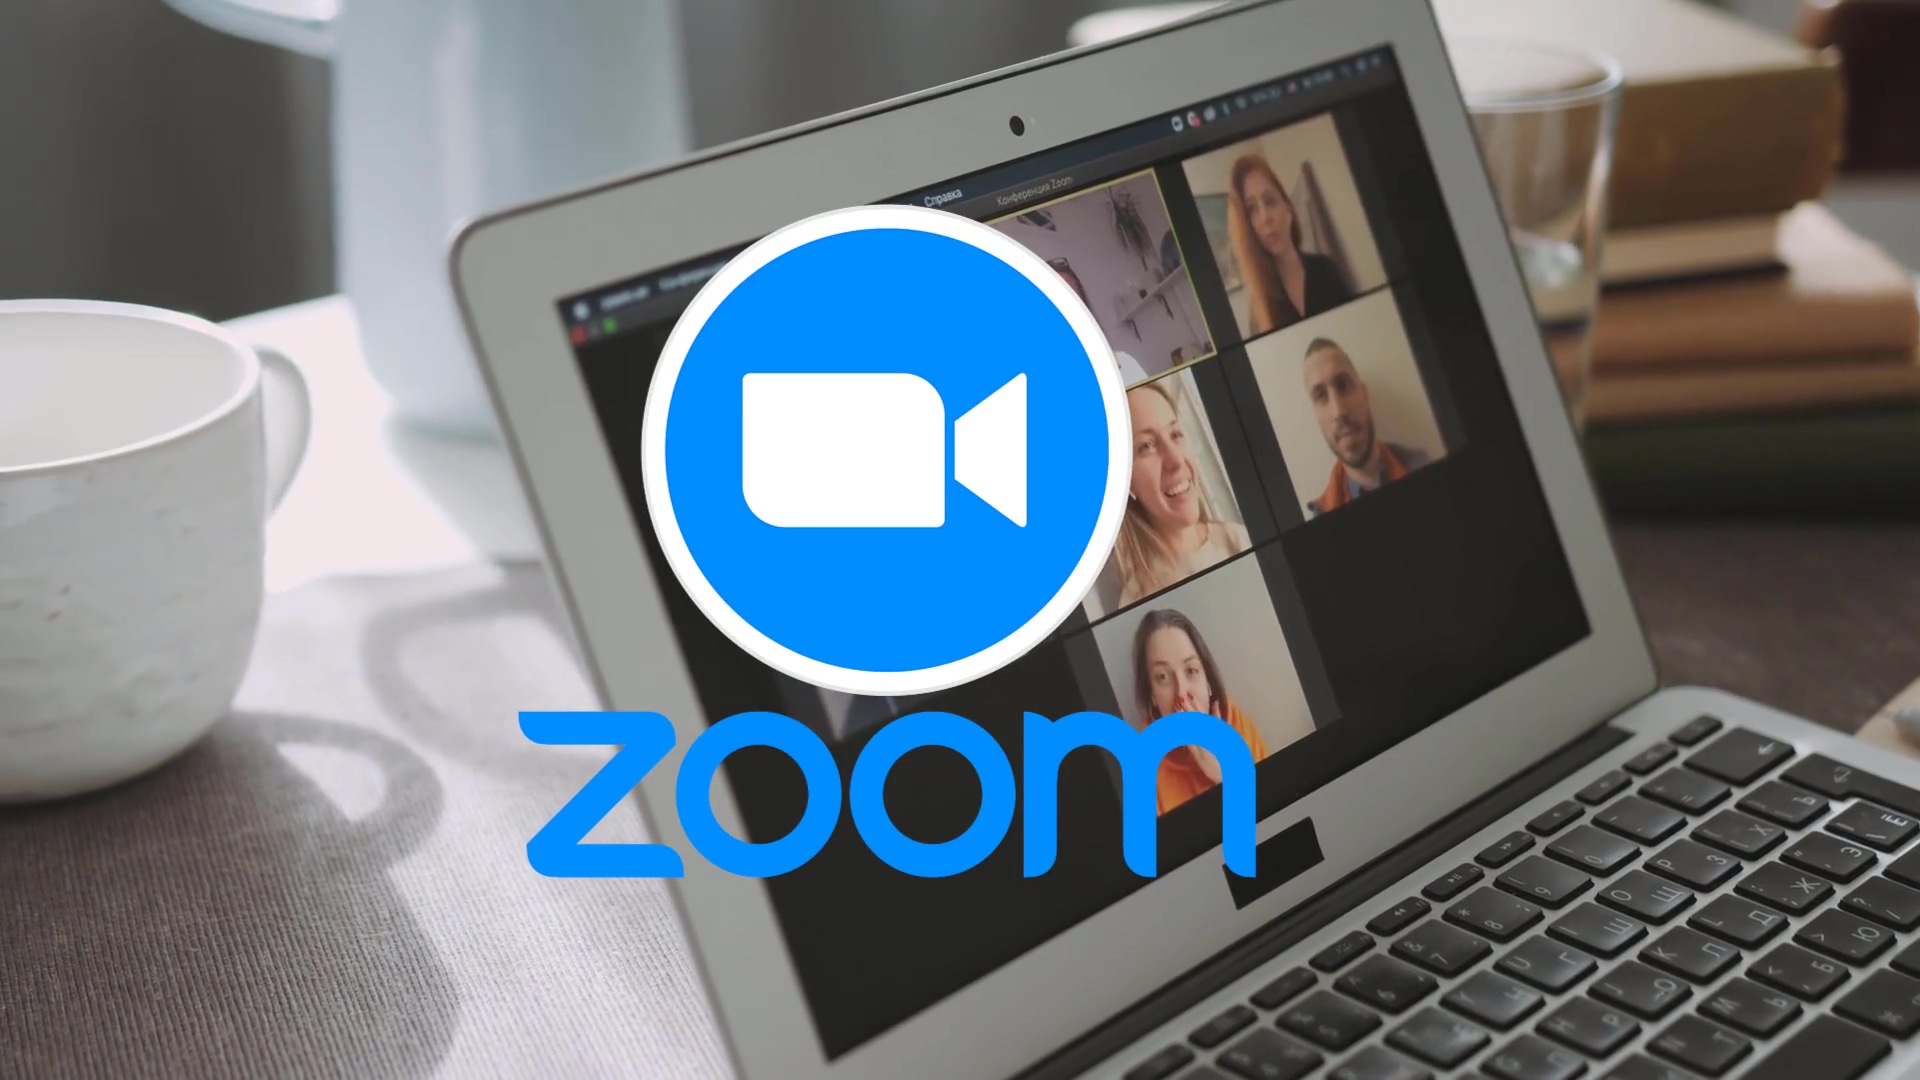 zoom integration video 083121_new-1